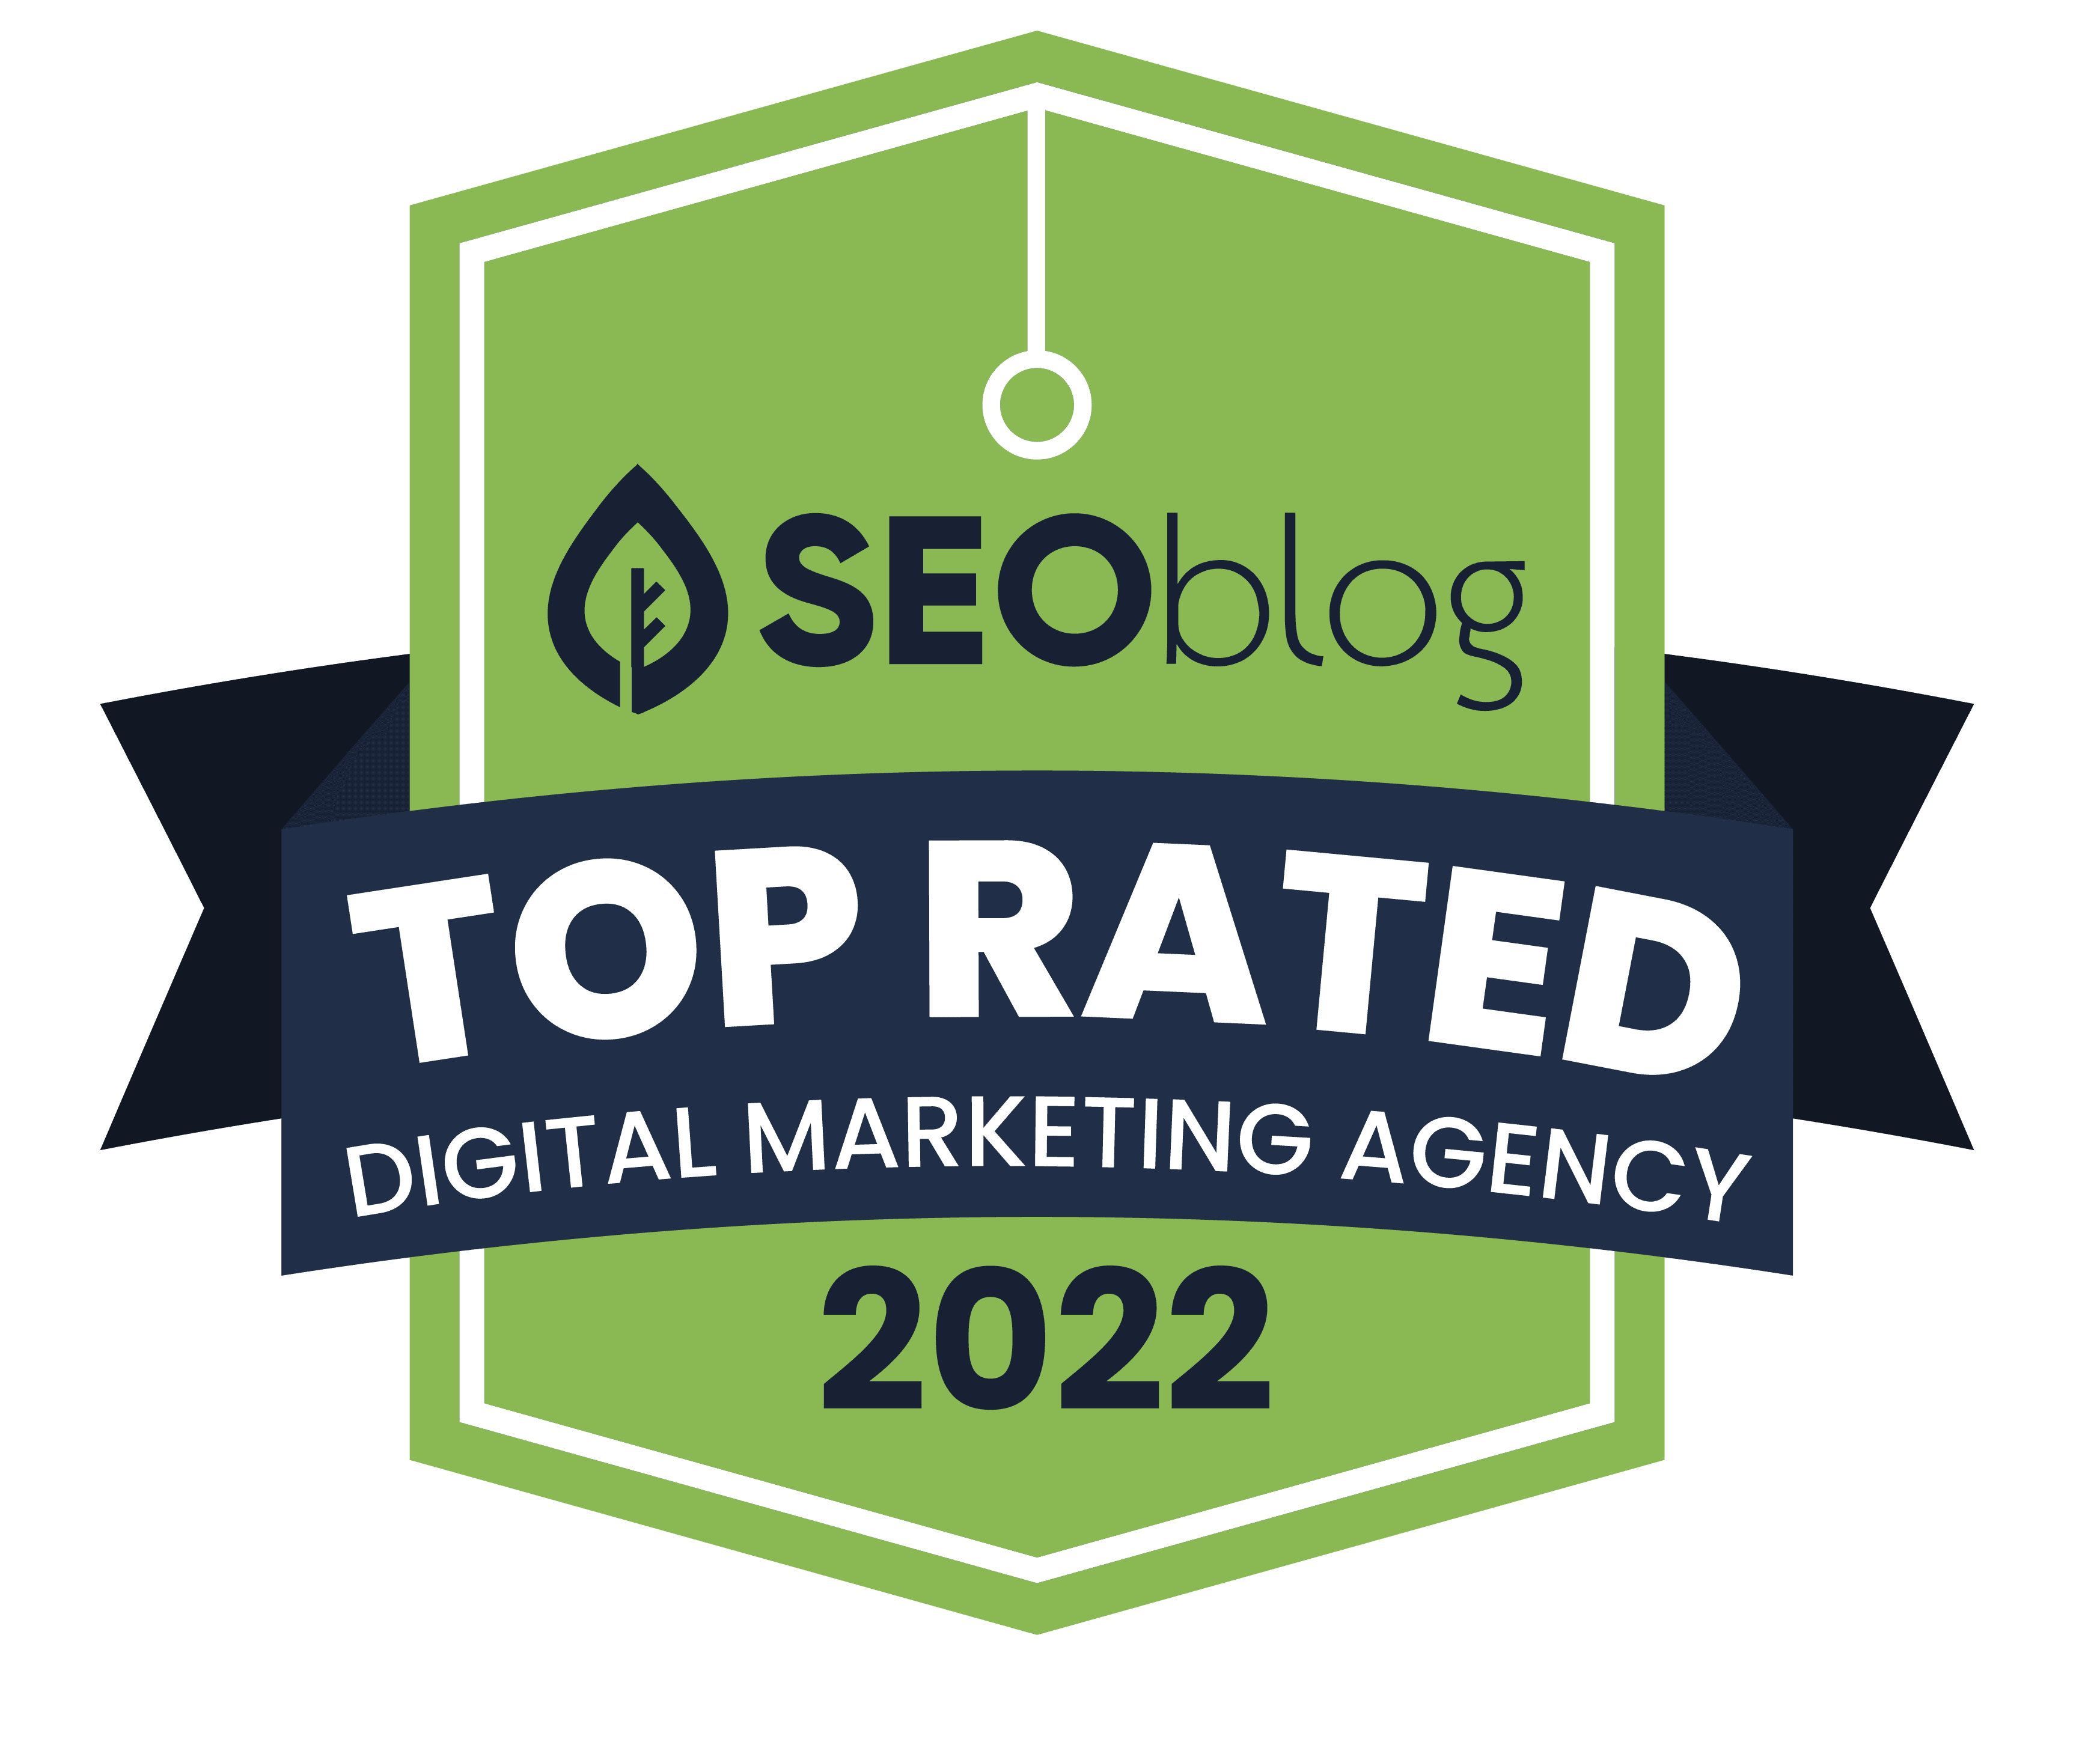 Top Rated Digital Marketing Agency by SEOblog